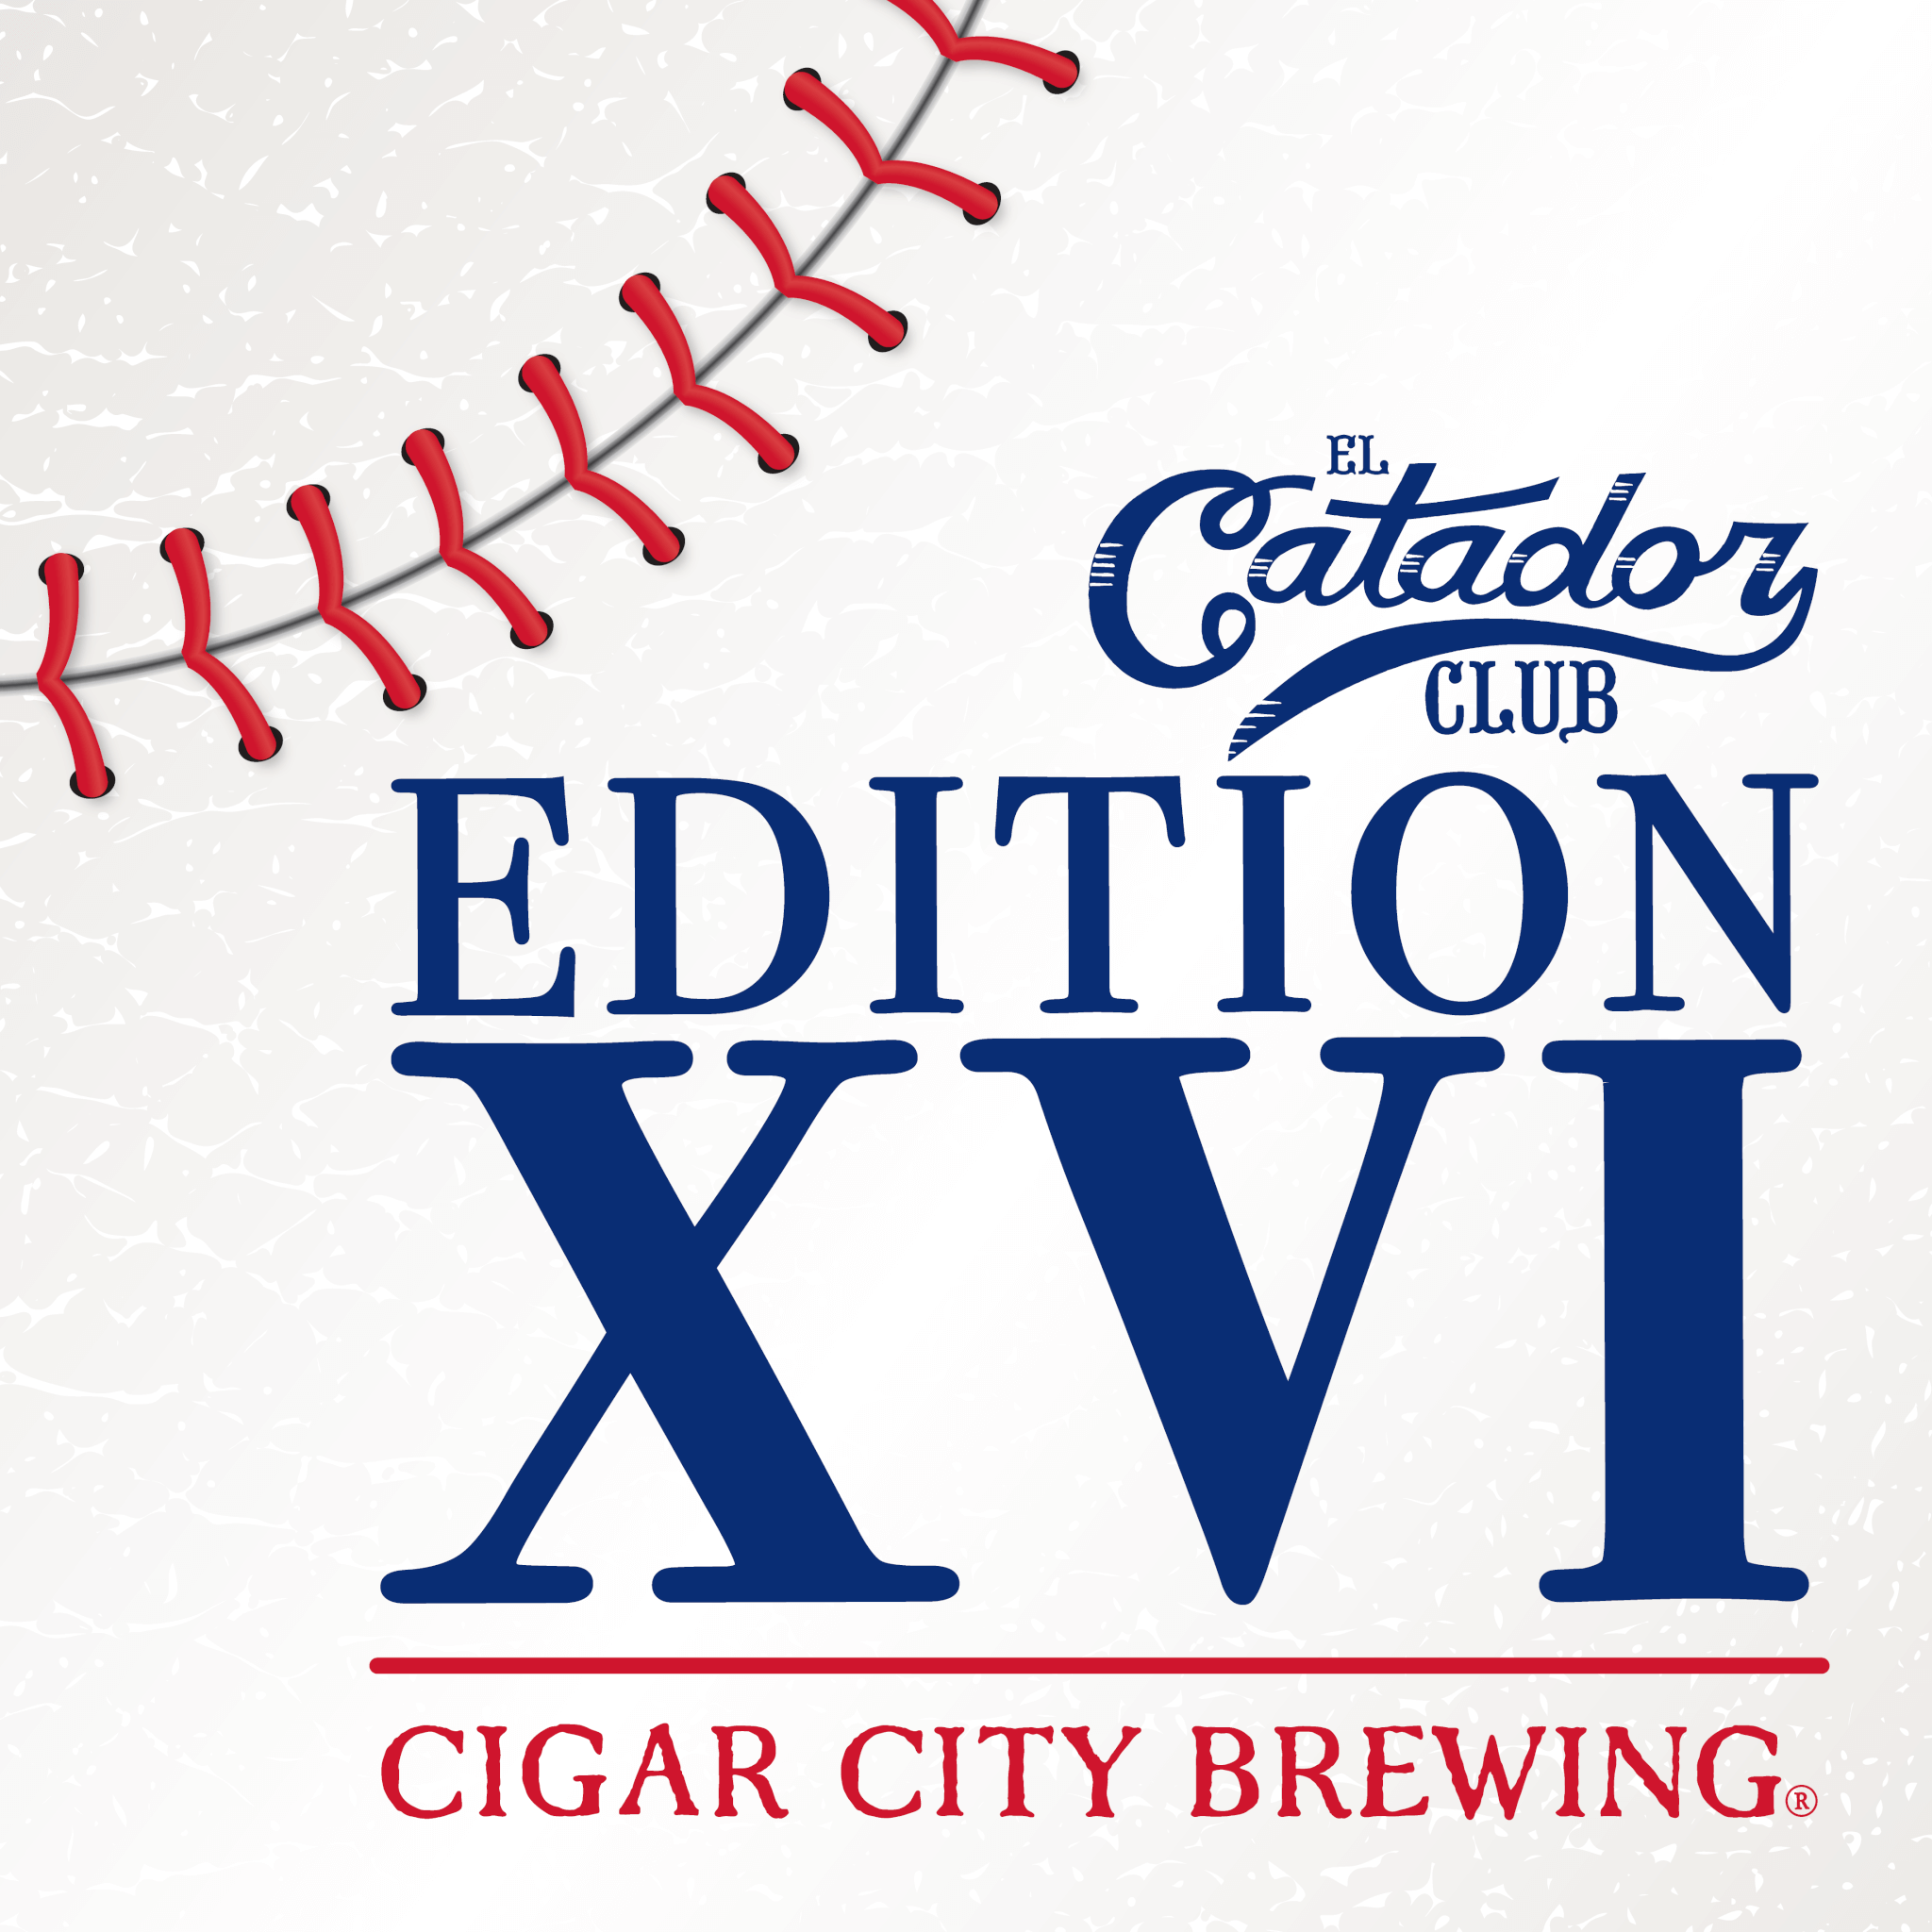 Logo artwork from the sixteenth edition of Cigar City Brewing's El Catador barrel-aged beer club.